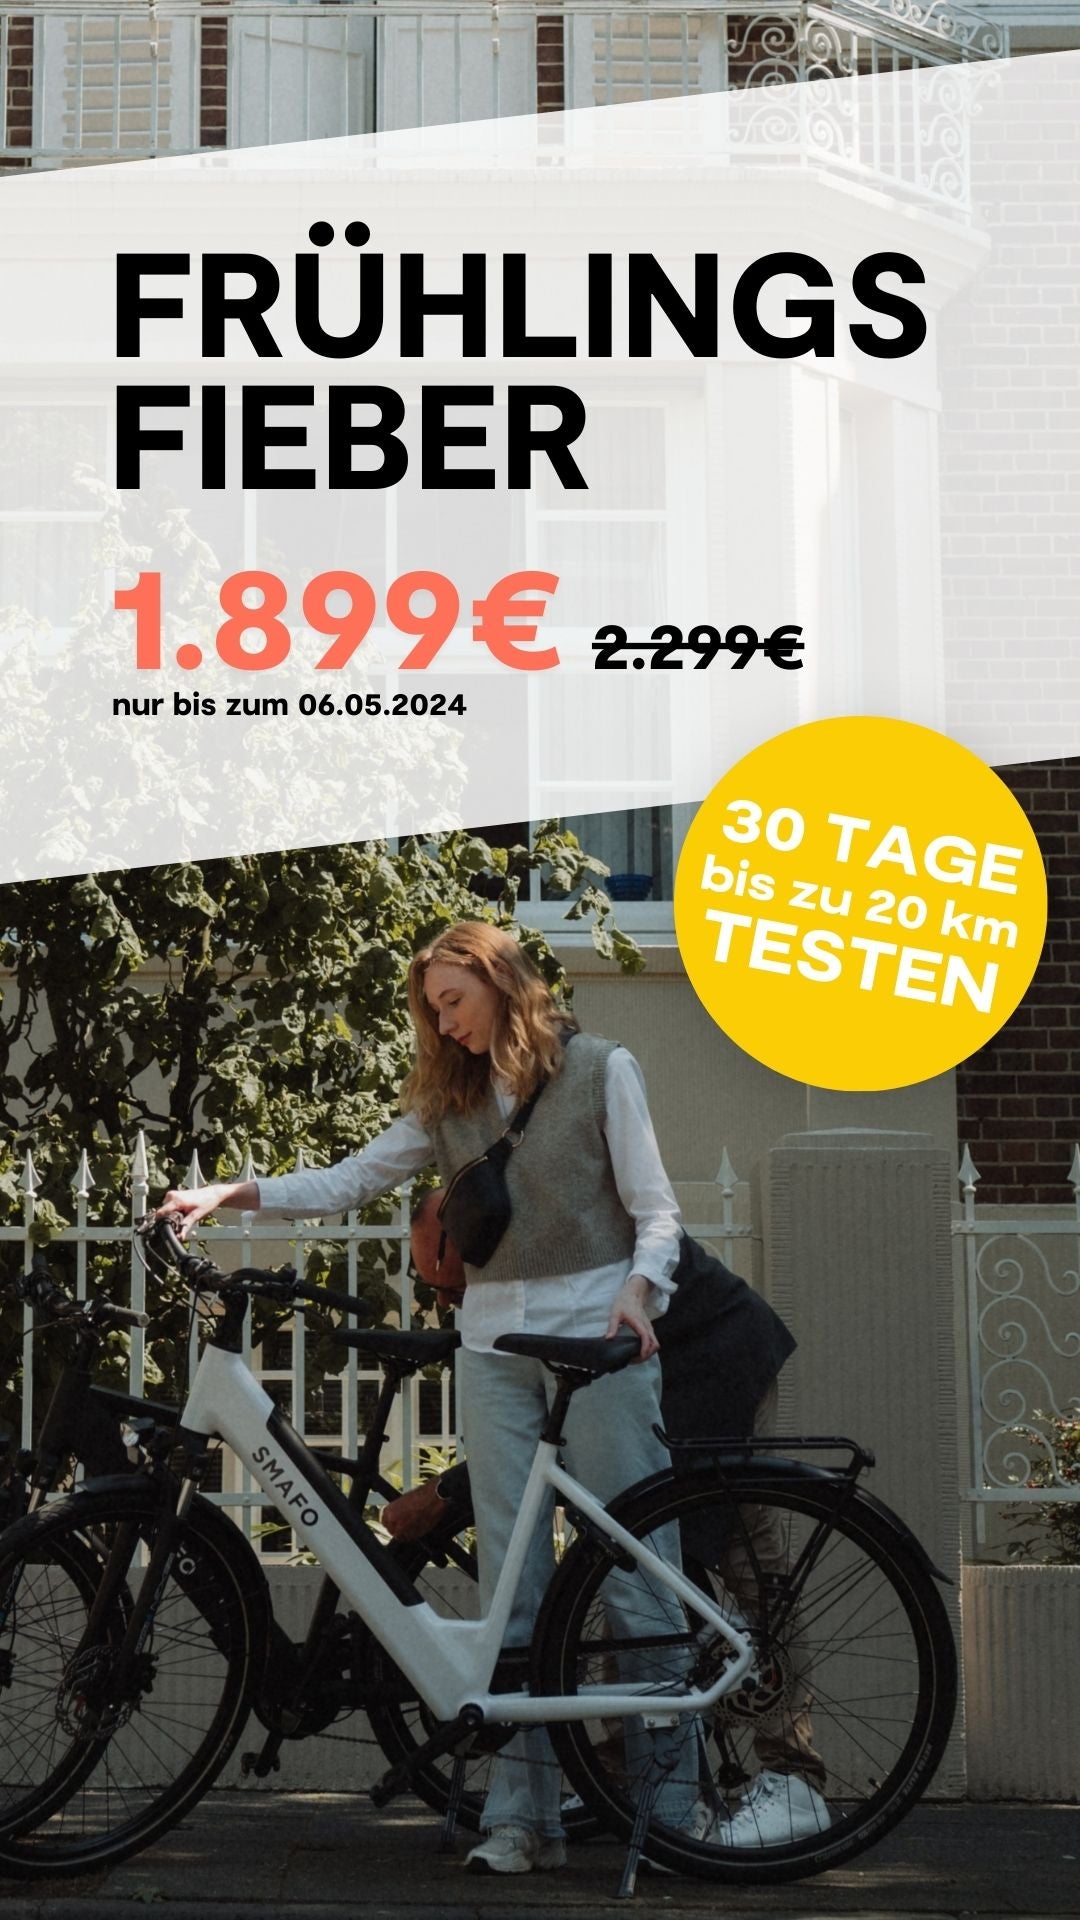 SMAFO Frühlingsfieber 400€ E-Bike Rabatt